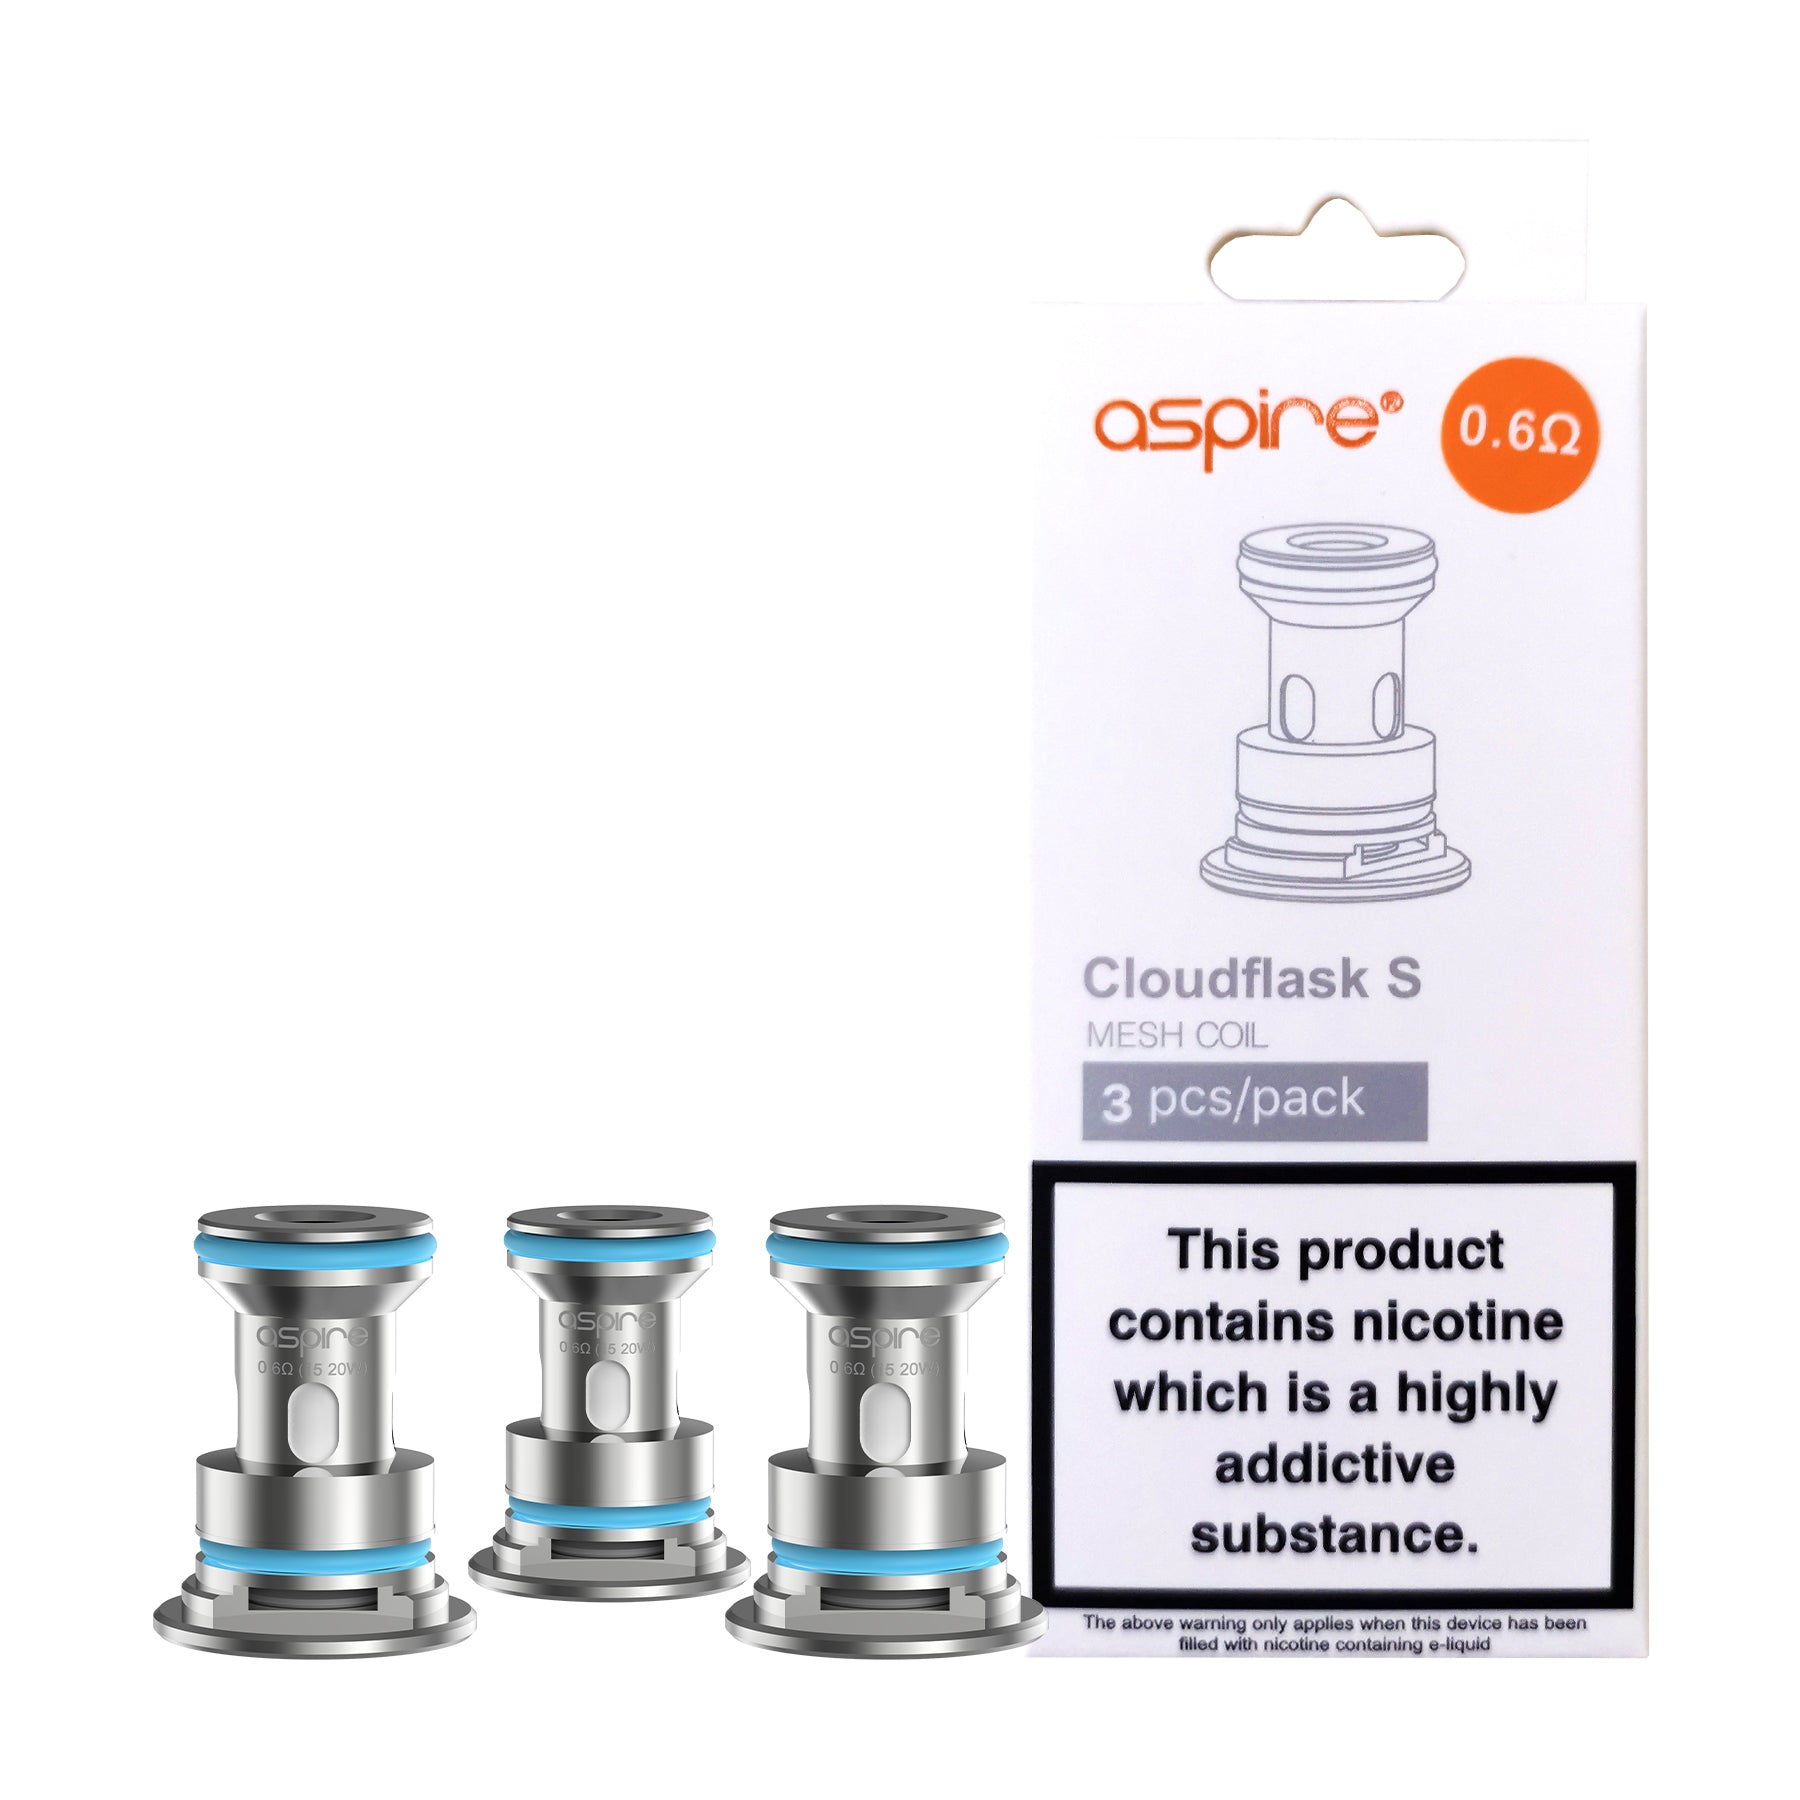 Cloudflask | Aspire Replacement | Buy Vape Coils Online